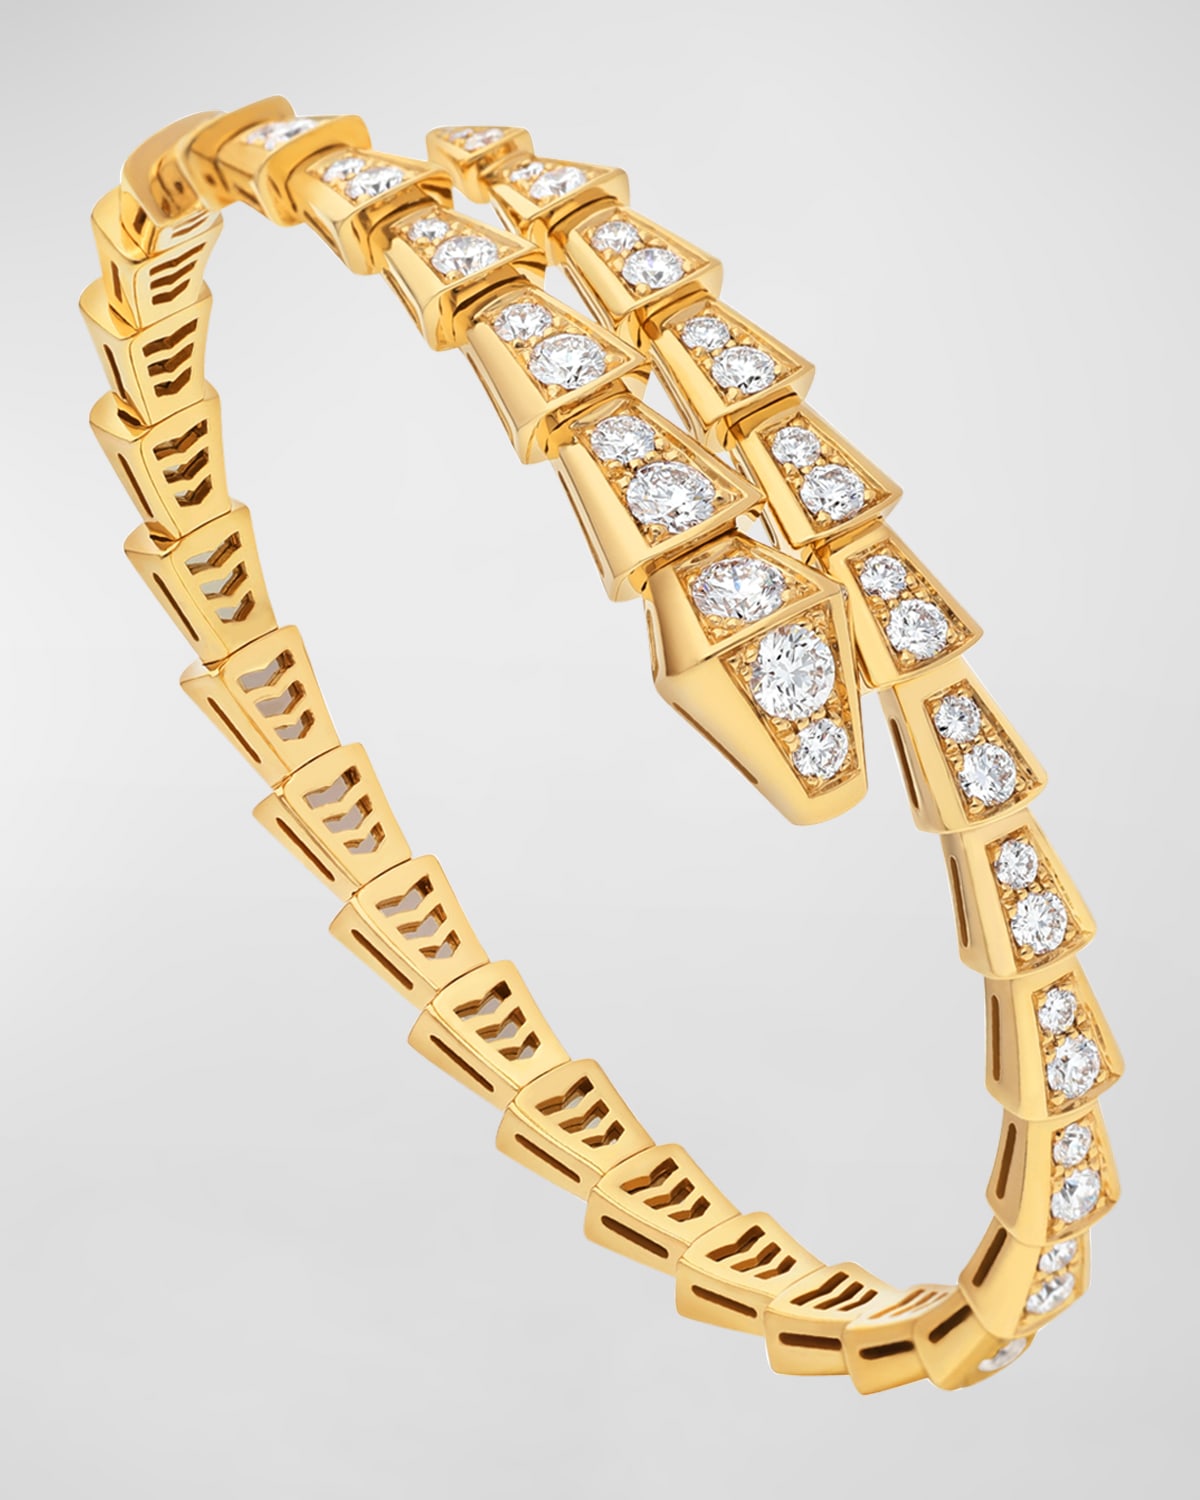 Serpenti Yellow Gold Diamond Bracelet, Size Small